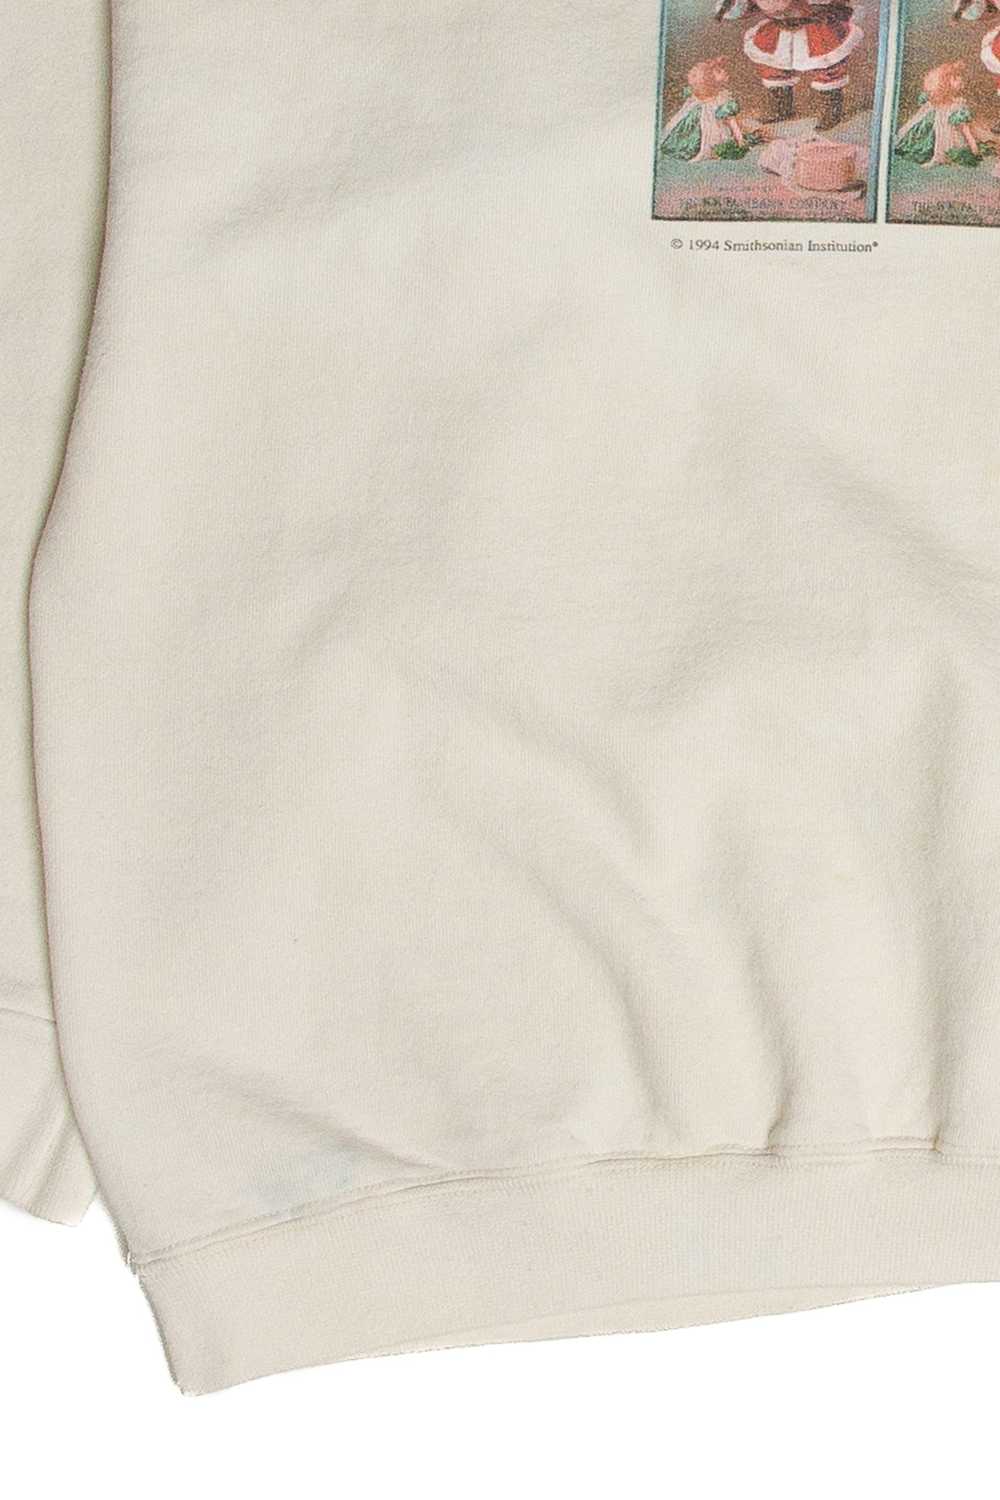 Vintage Smithsonian Santa Claus Soap Sweatshirt (… - image 3